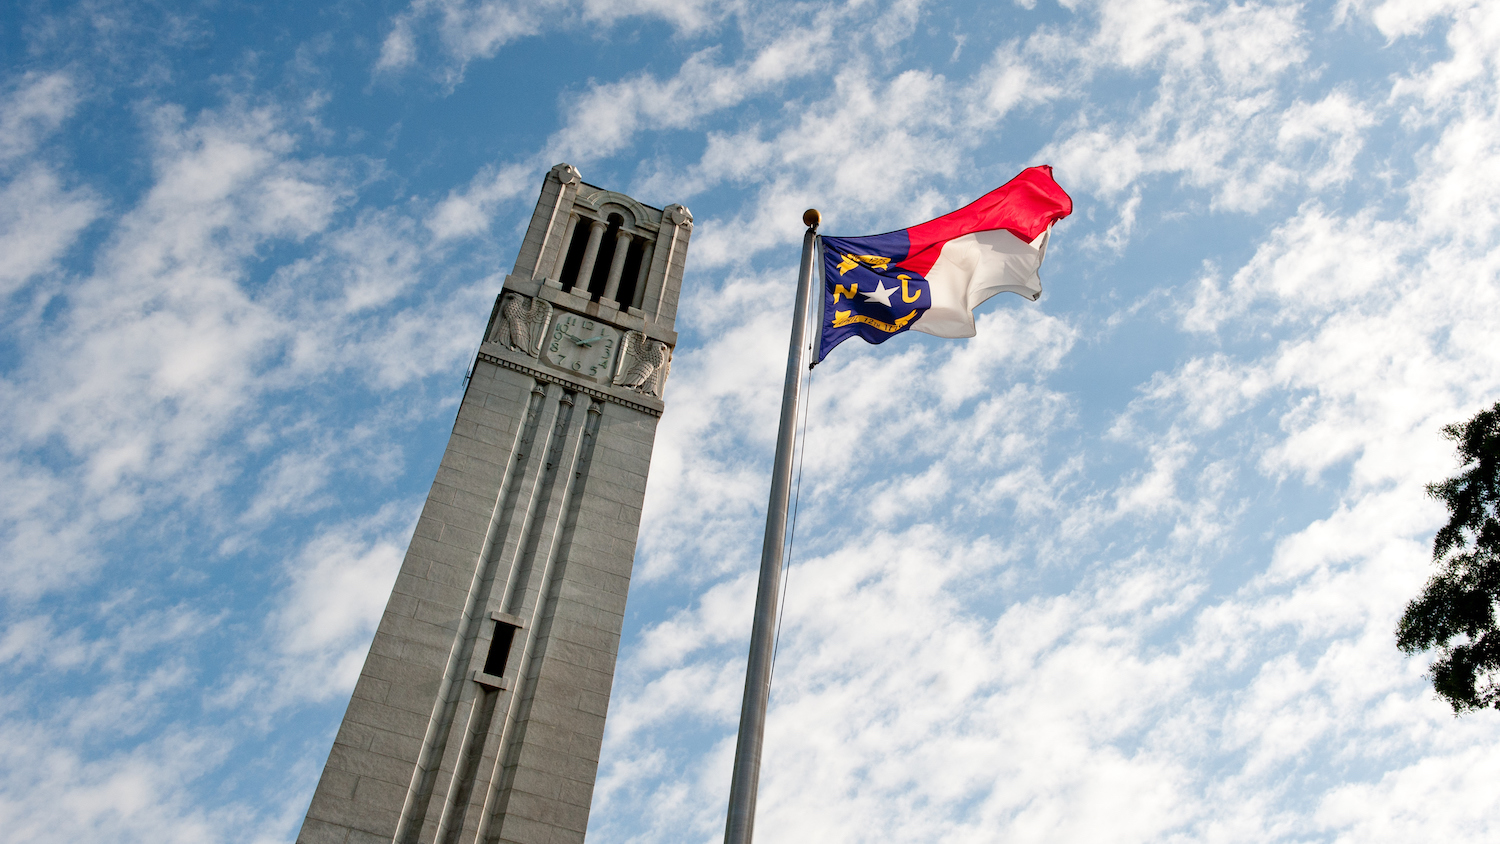 NC State Belltower and flag of North Carolina